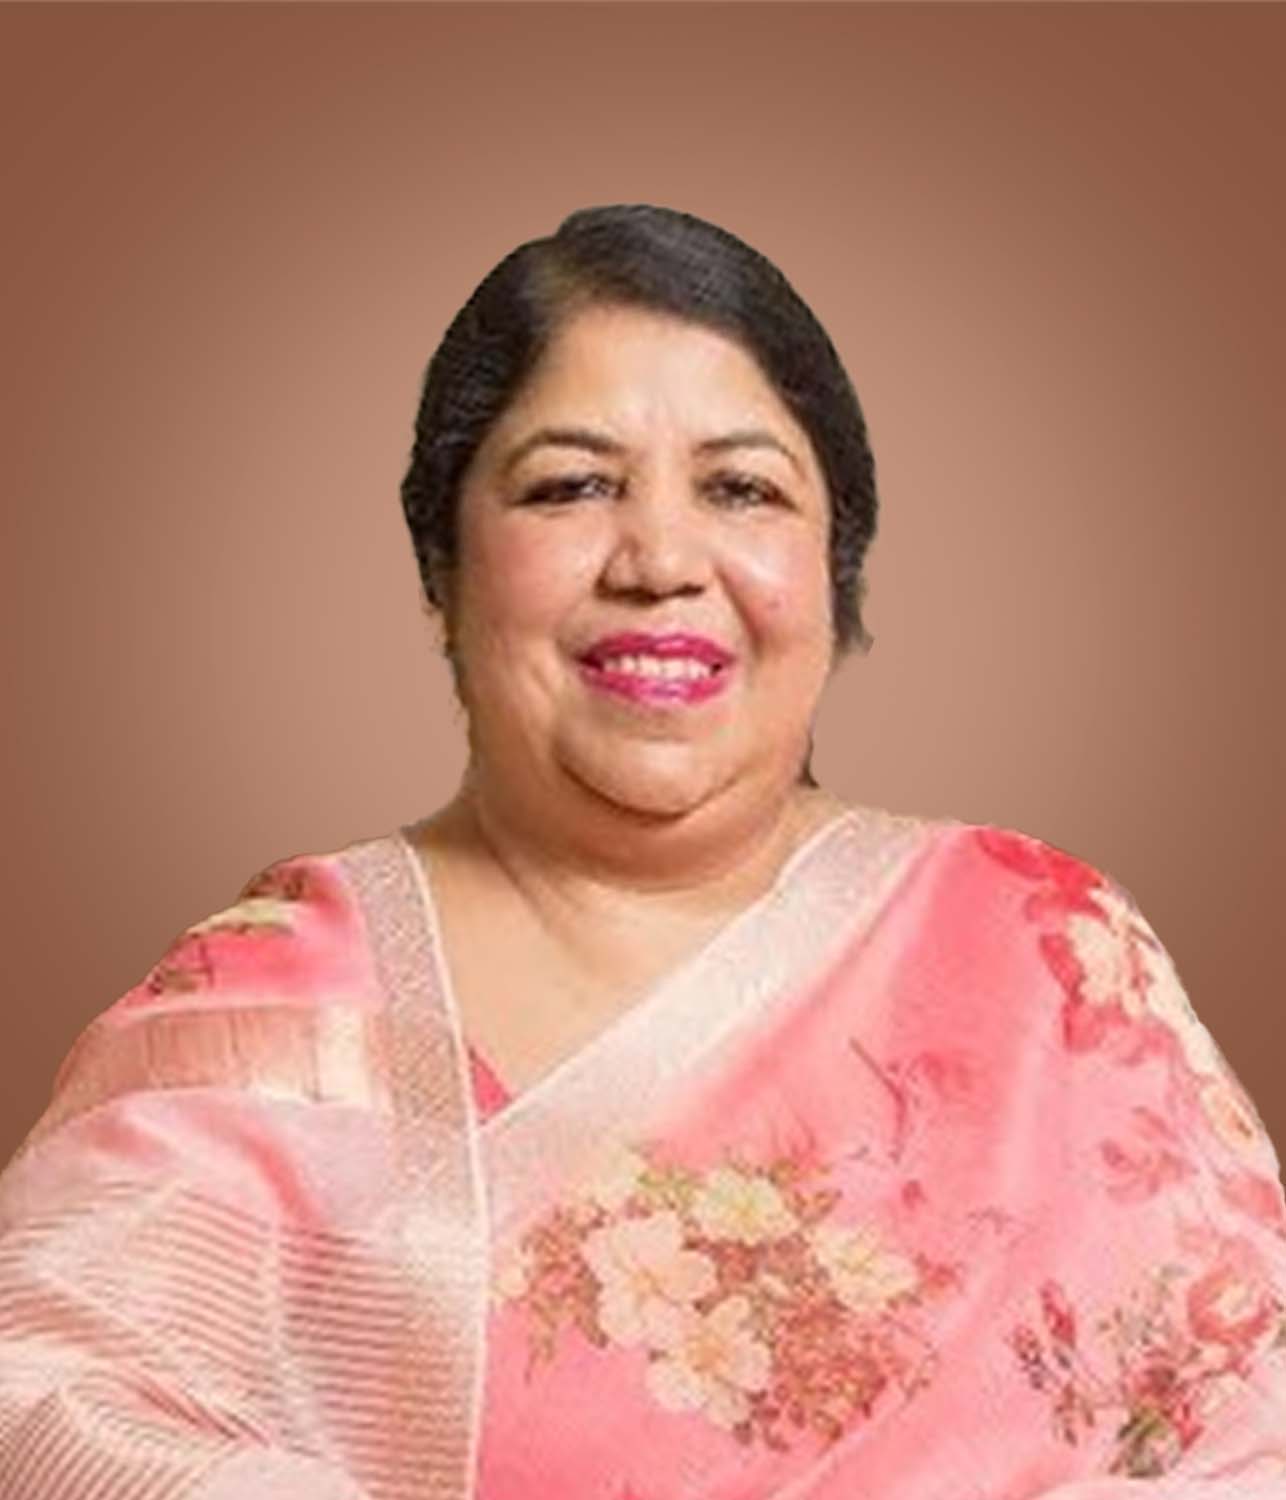 Dr. Shirin Sharmin Chaudhury